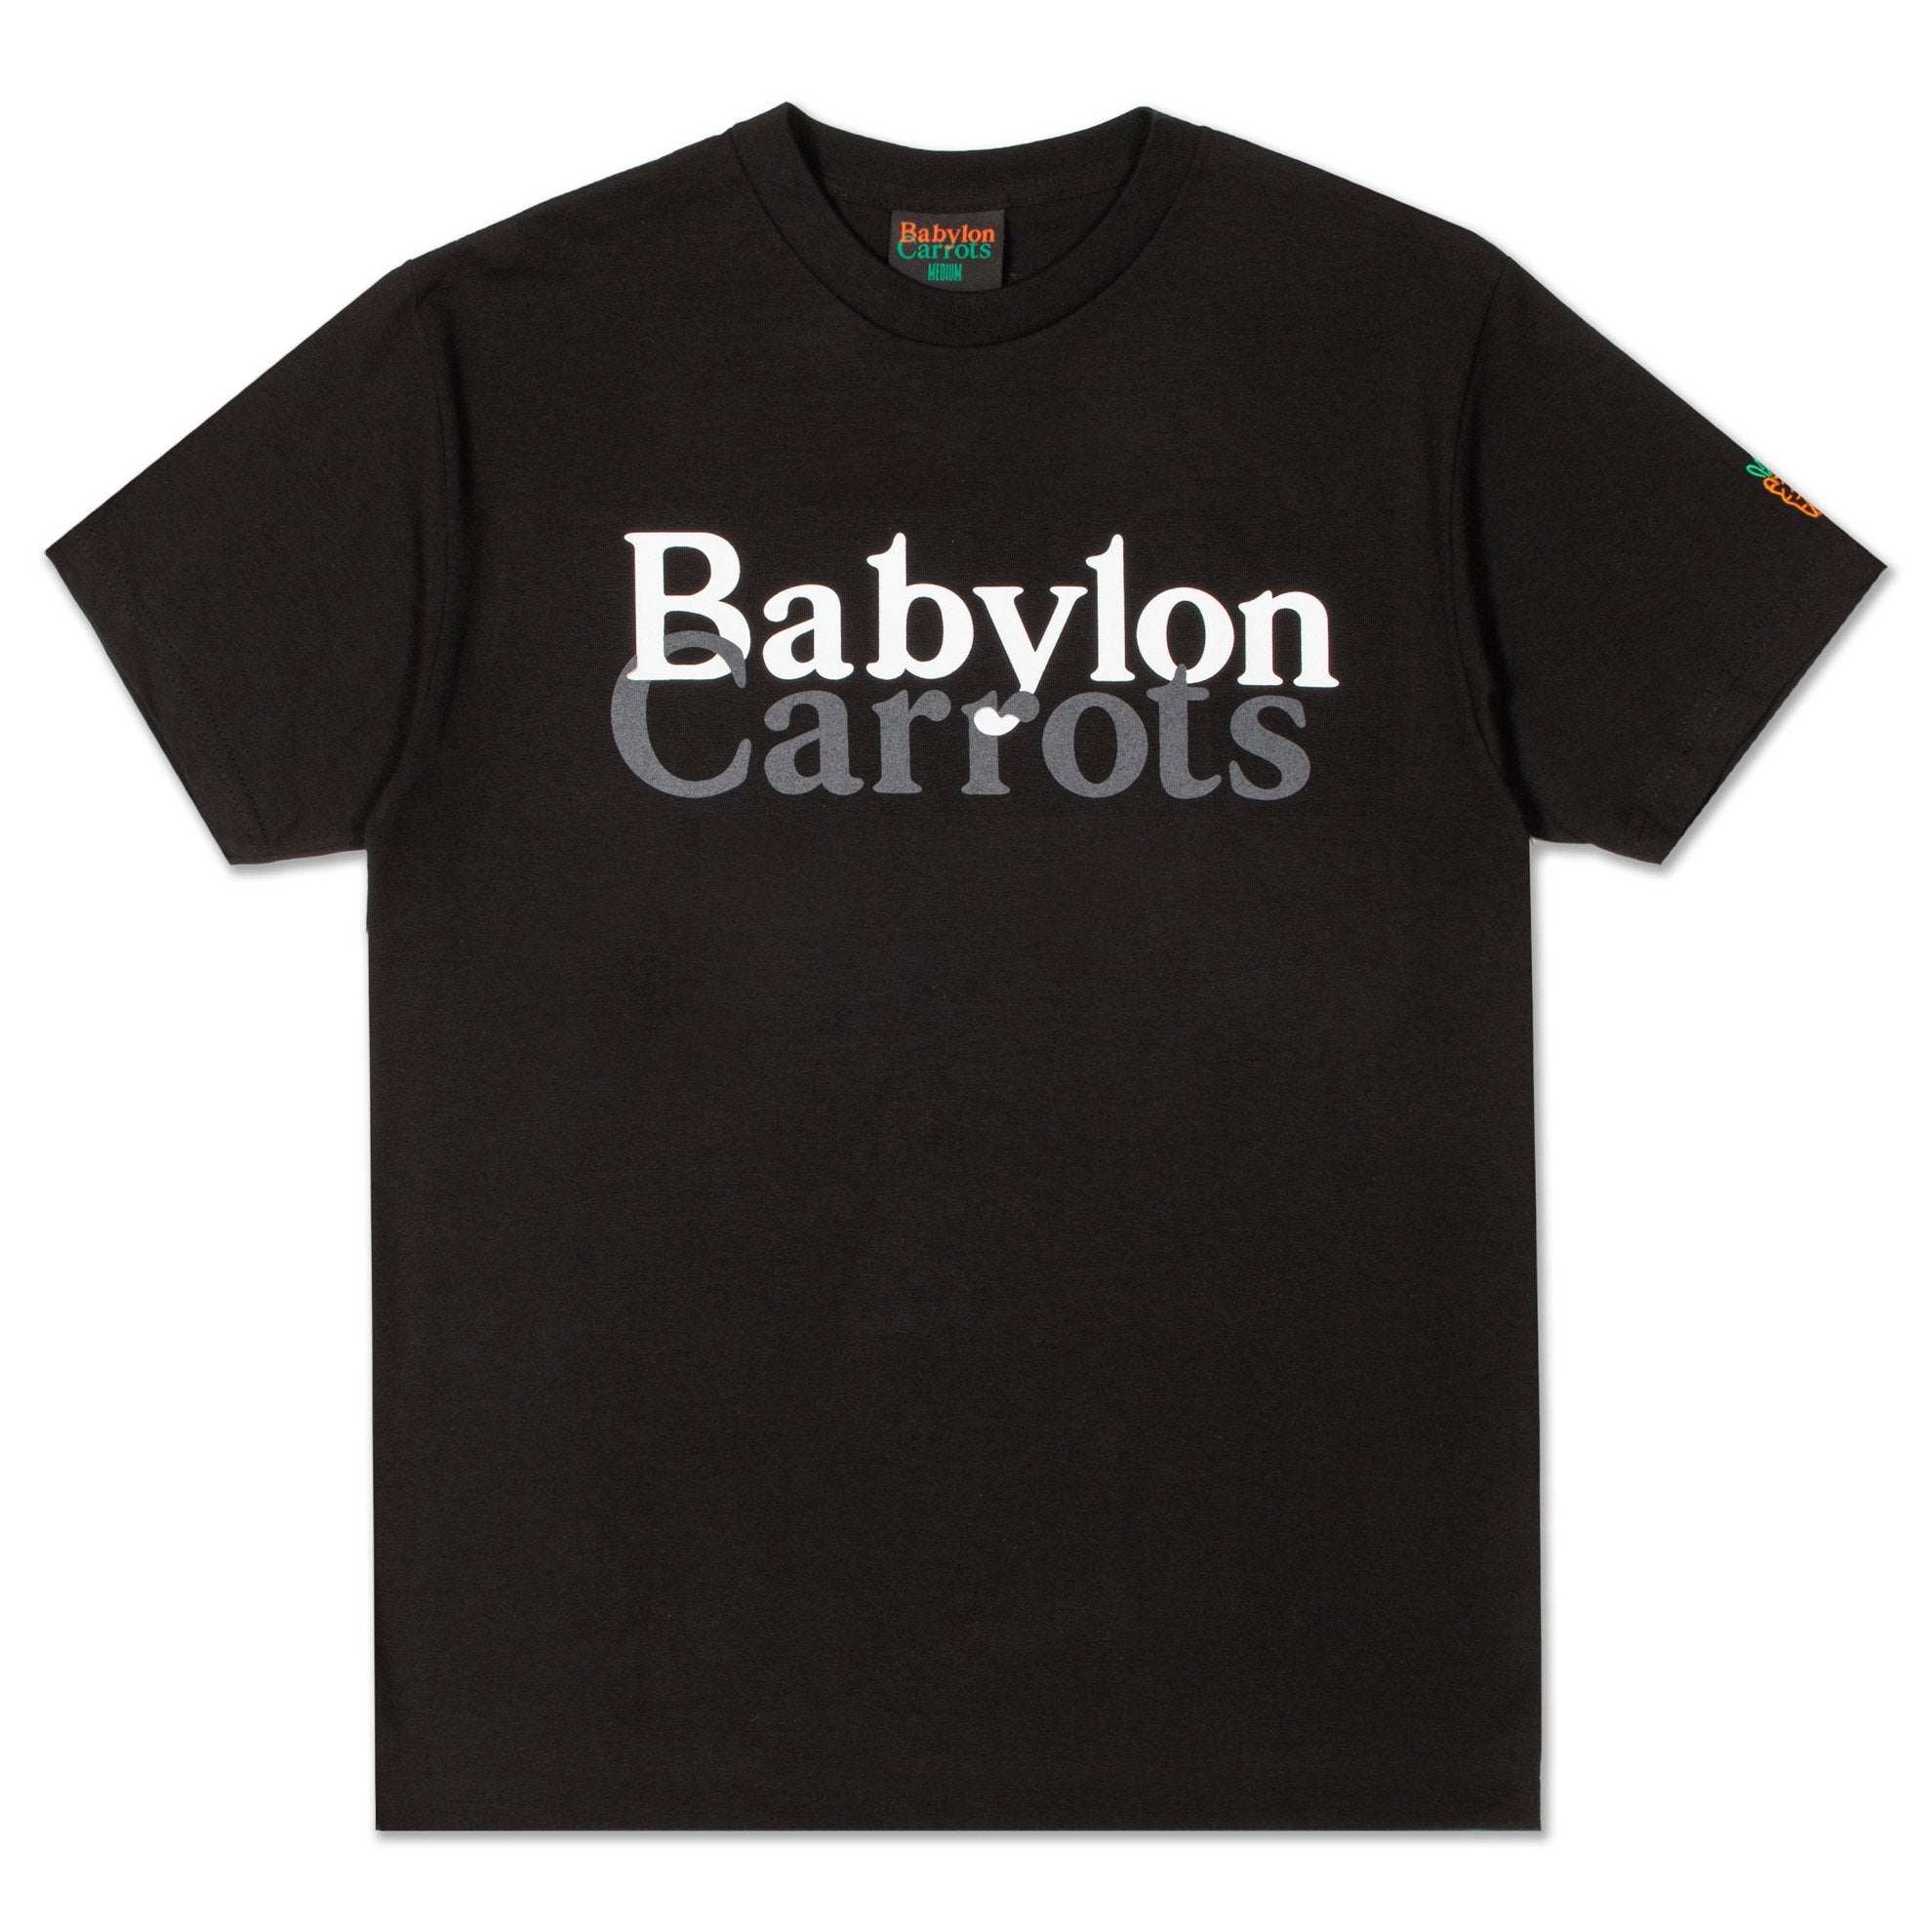 Carrots Men x Babylon Stacked Logo Tee Black SLT-BLK - T-SHIRTS - Canada